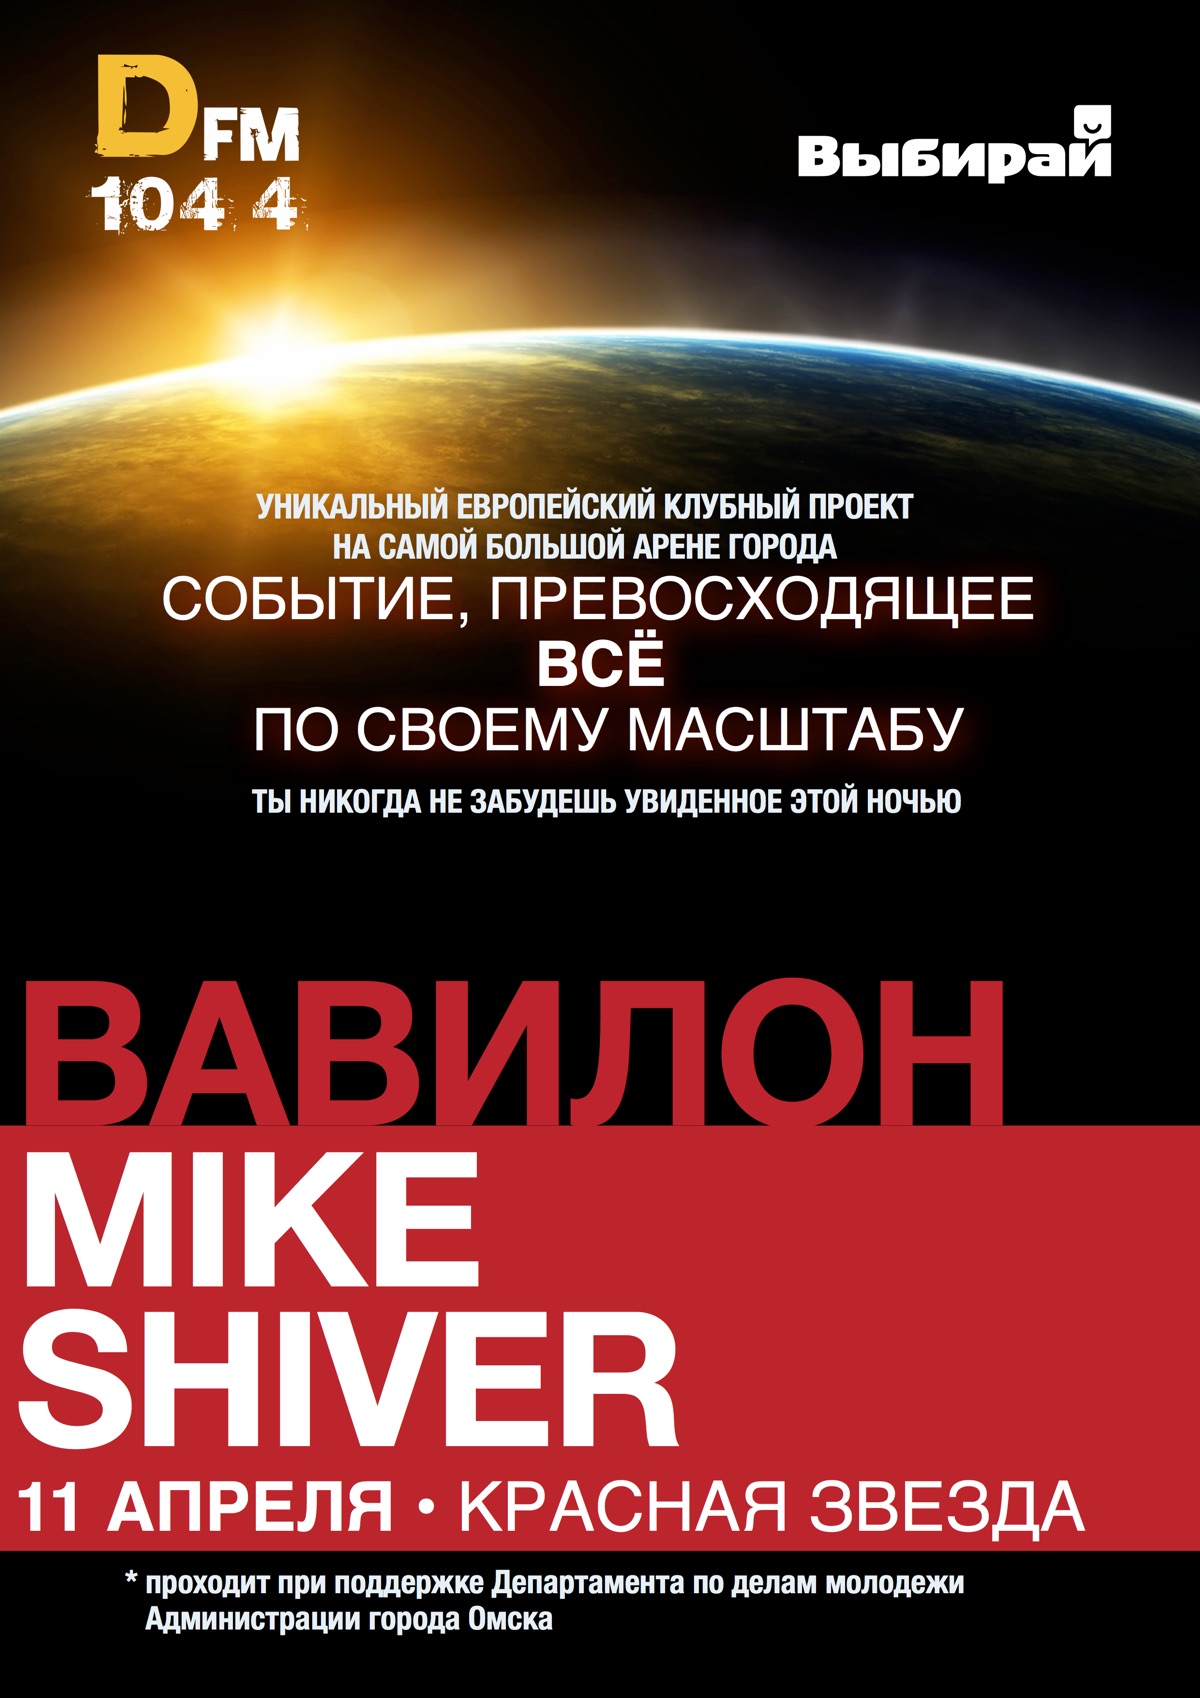 Листовка Вавилон Mike Shiver Красная звезда рэйв Омск 11 апреля 2009 omsk